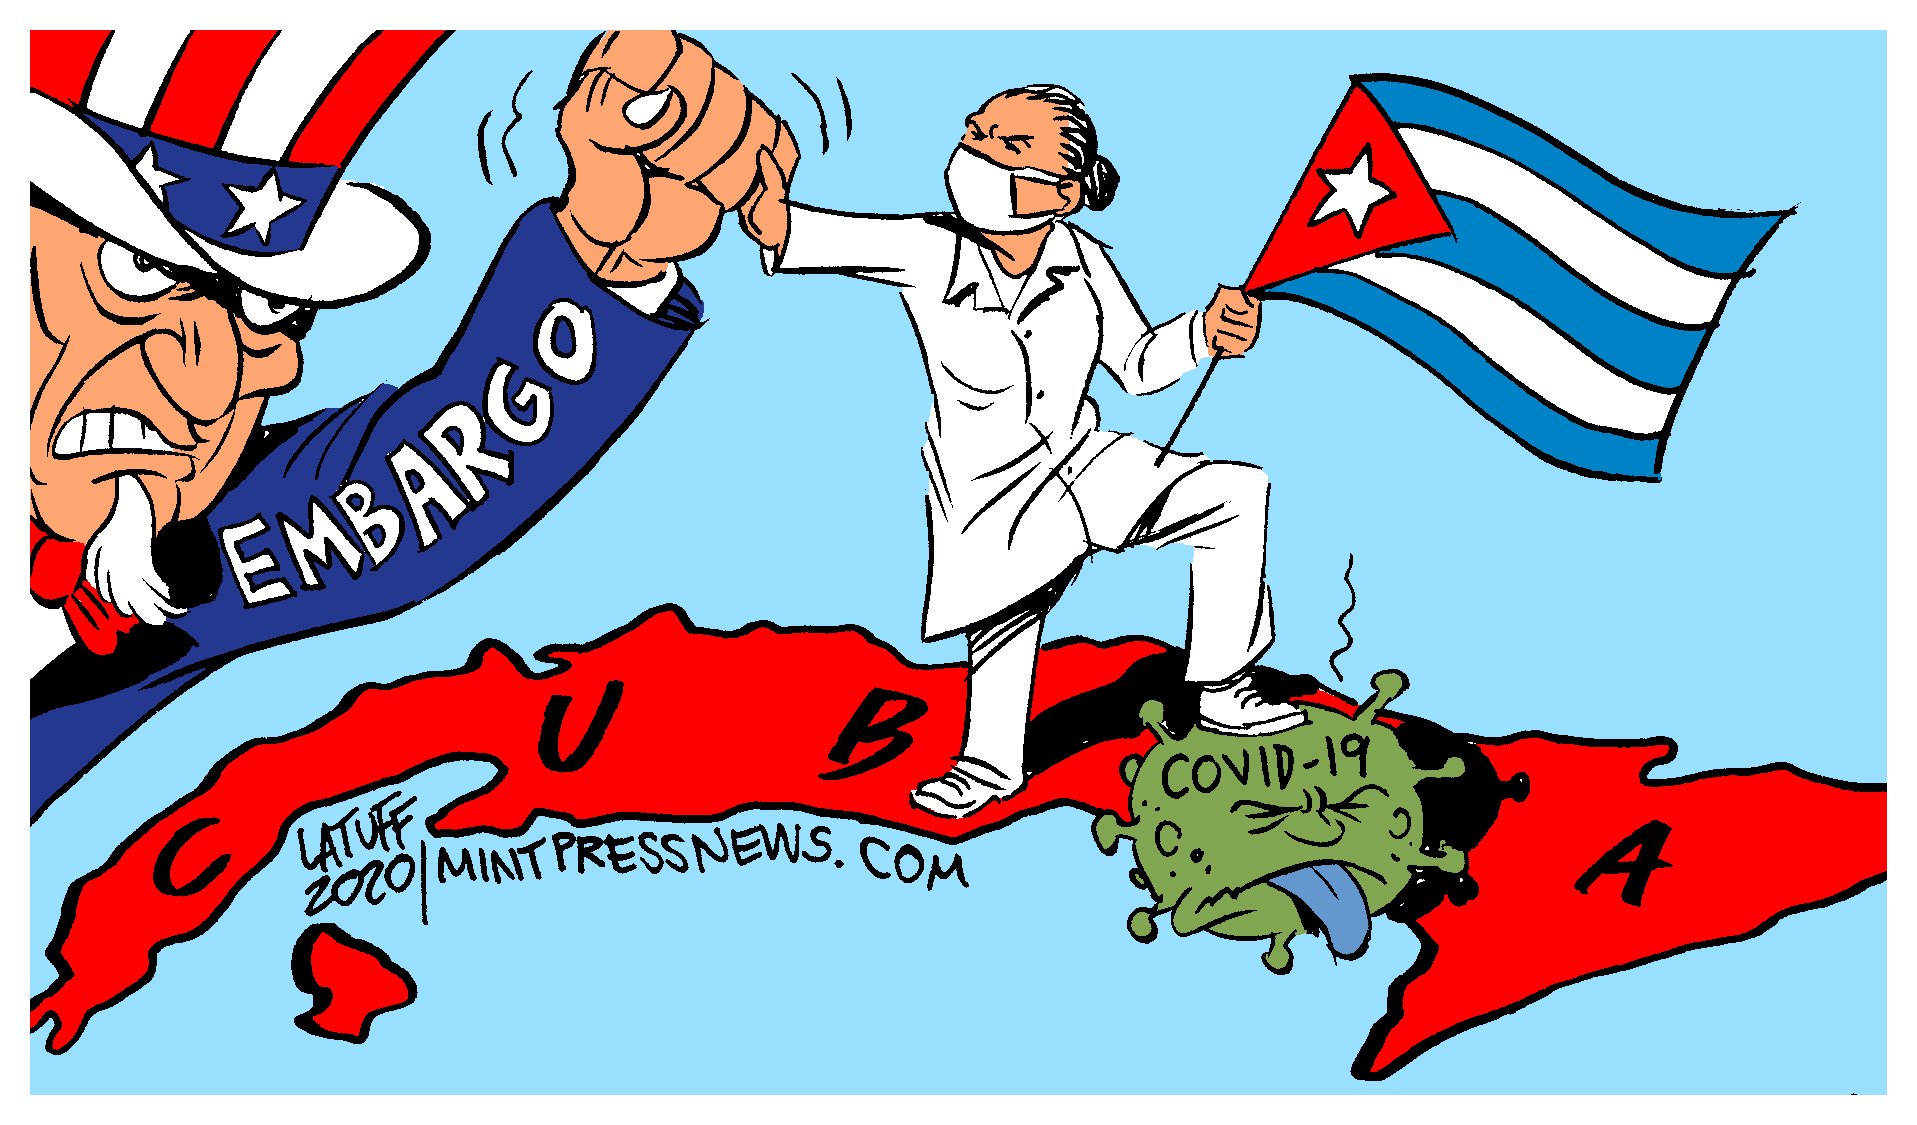 embargo Image Latuff